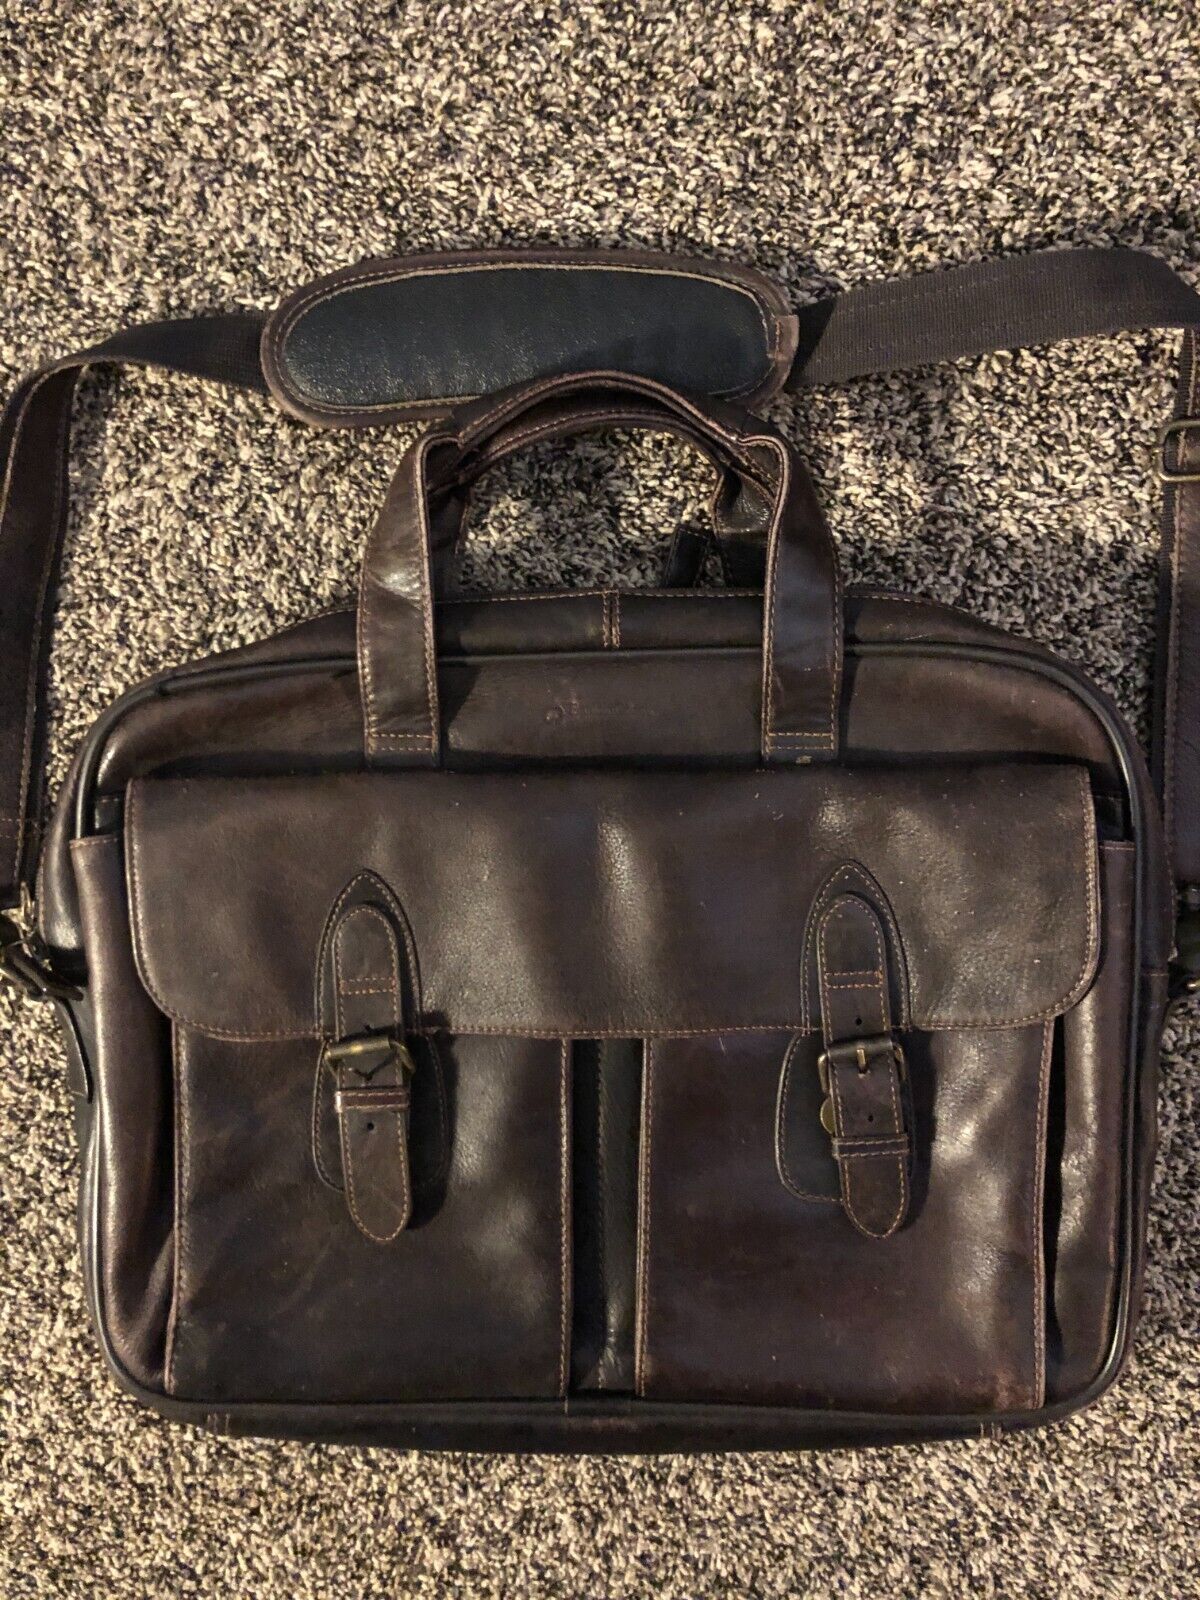 Franklin Covey Genuine Leather Brown Laptop Briefcase Organizer Messenger Bag